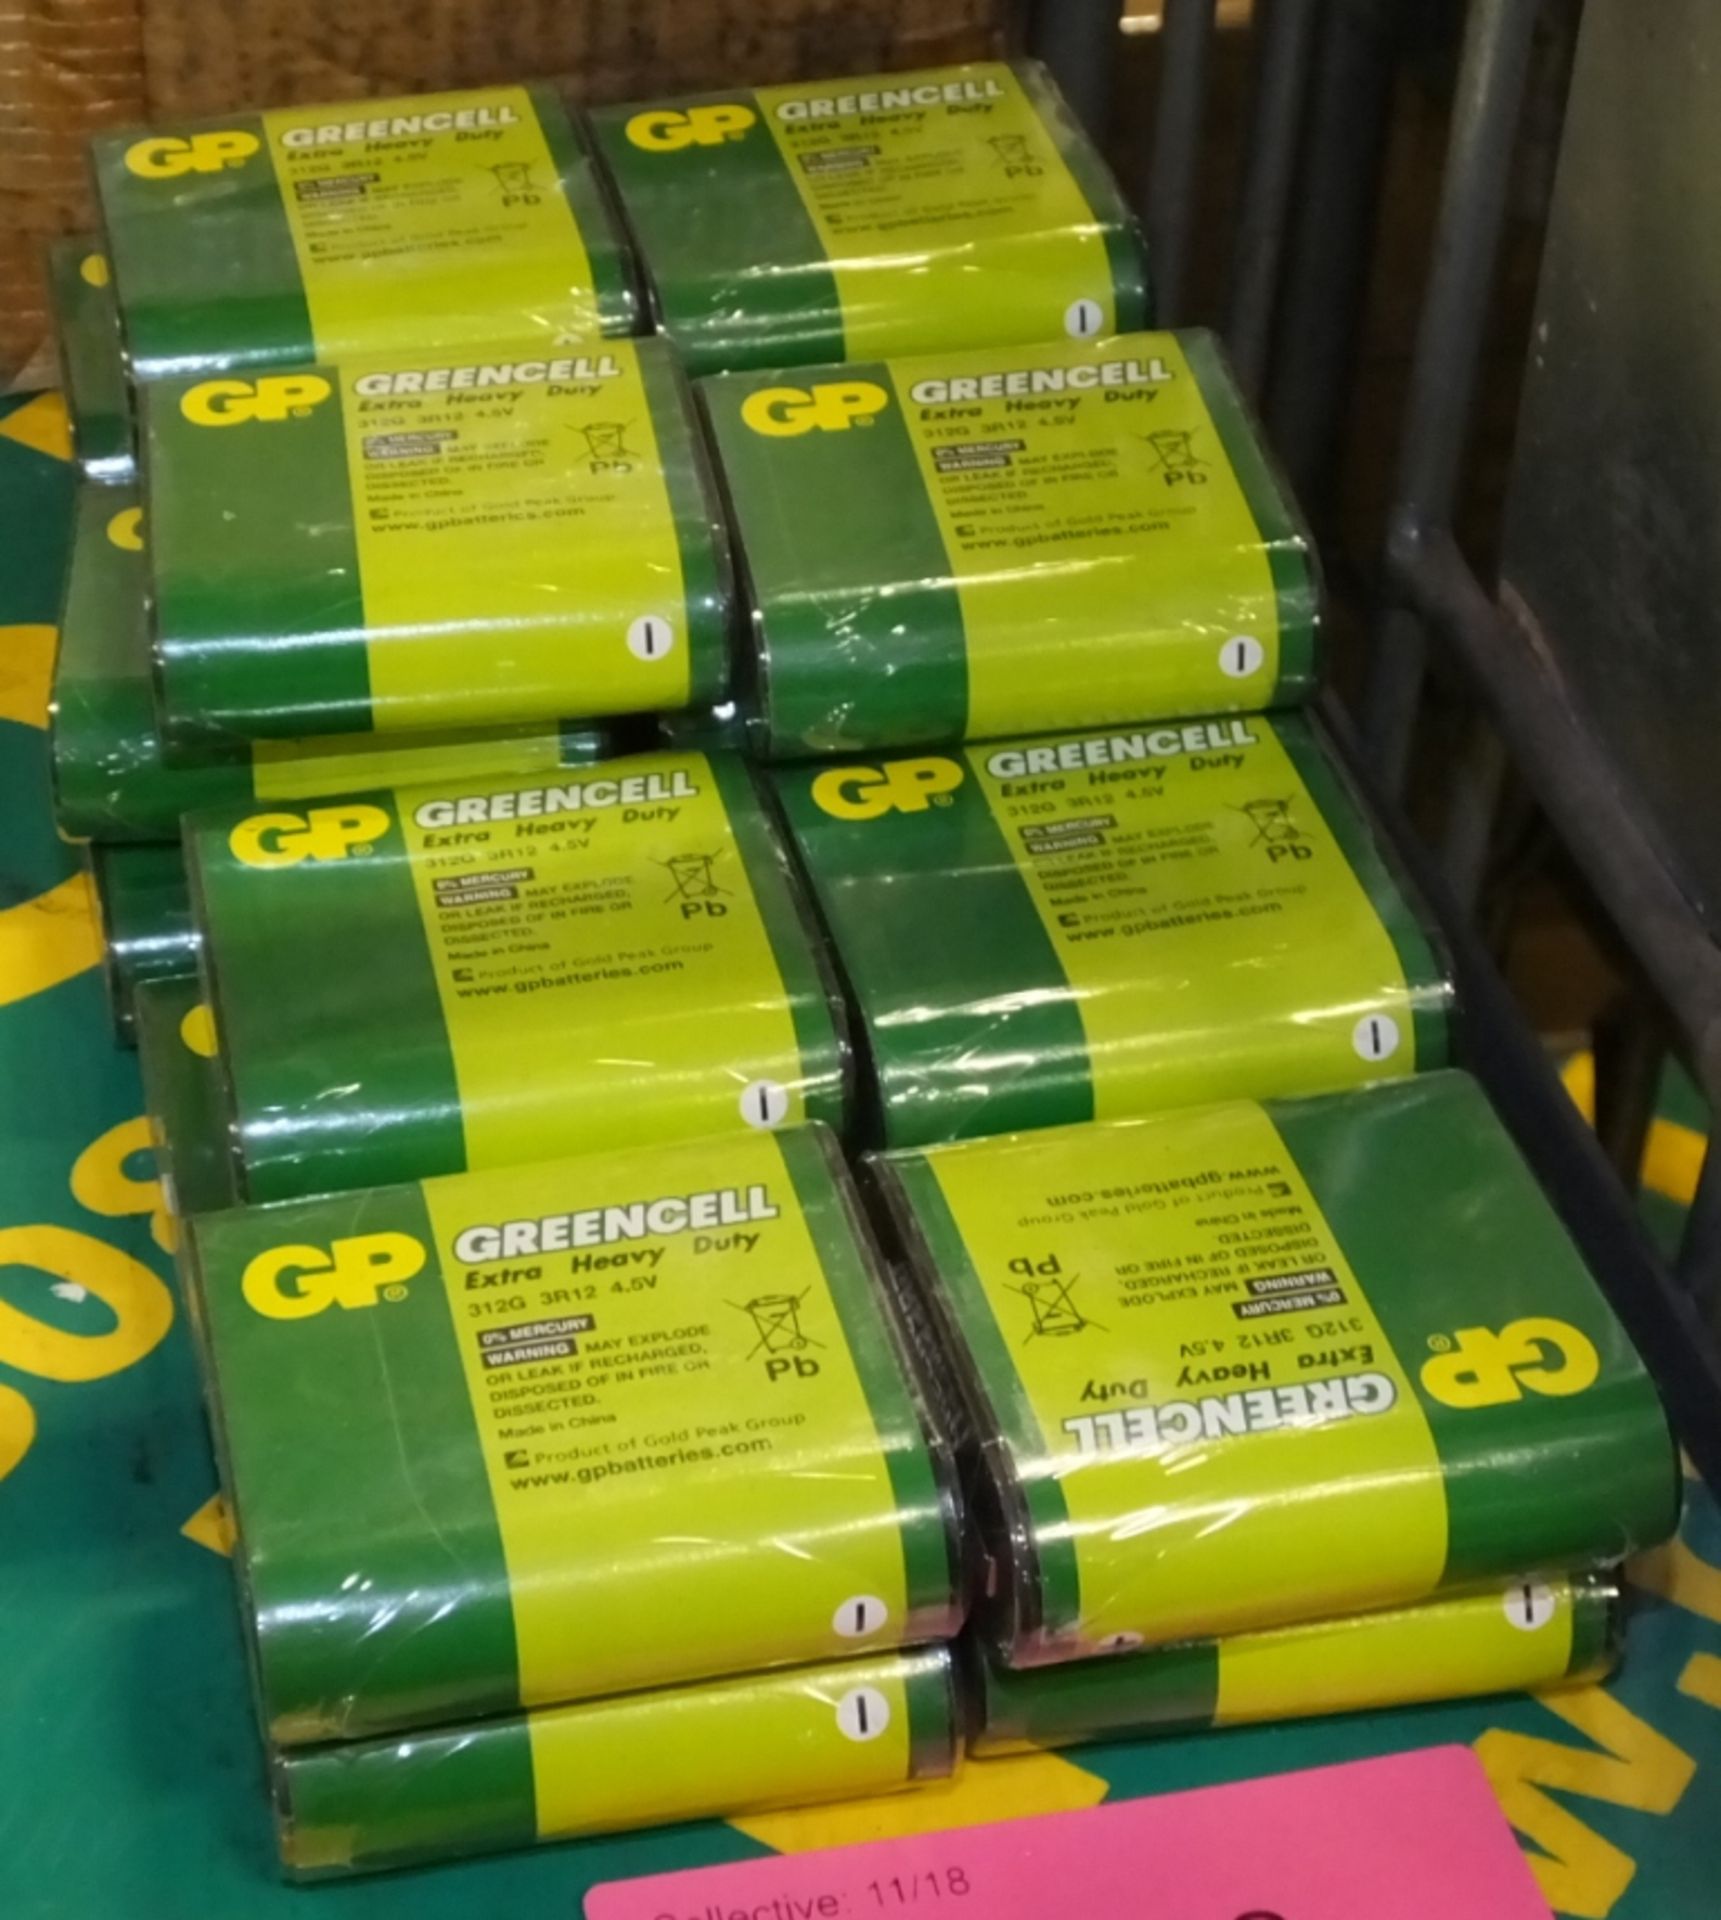 40x GreenCell Extra heavy duty batteries - 312G - 3R12 - 4.5V - Image 2 of 2